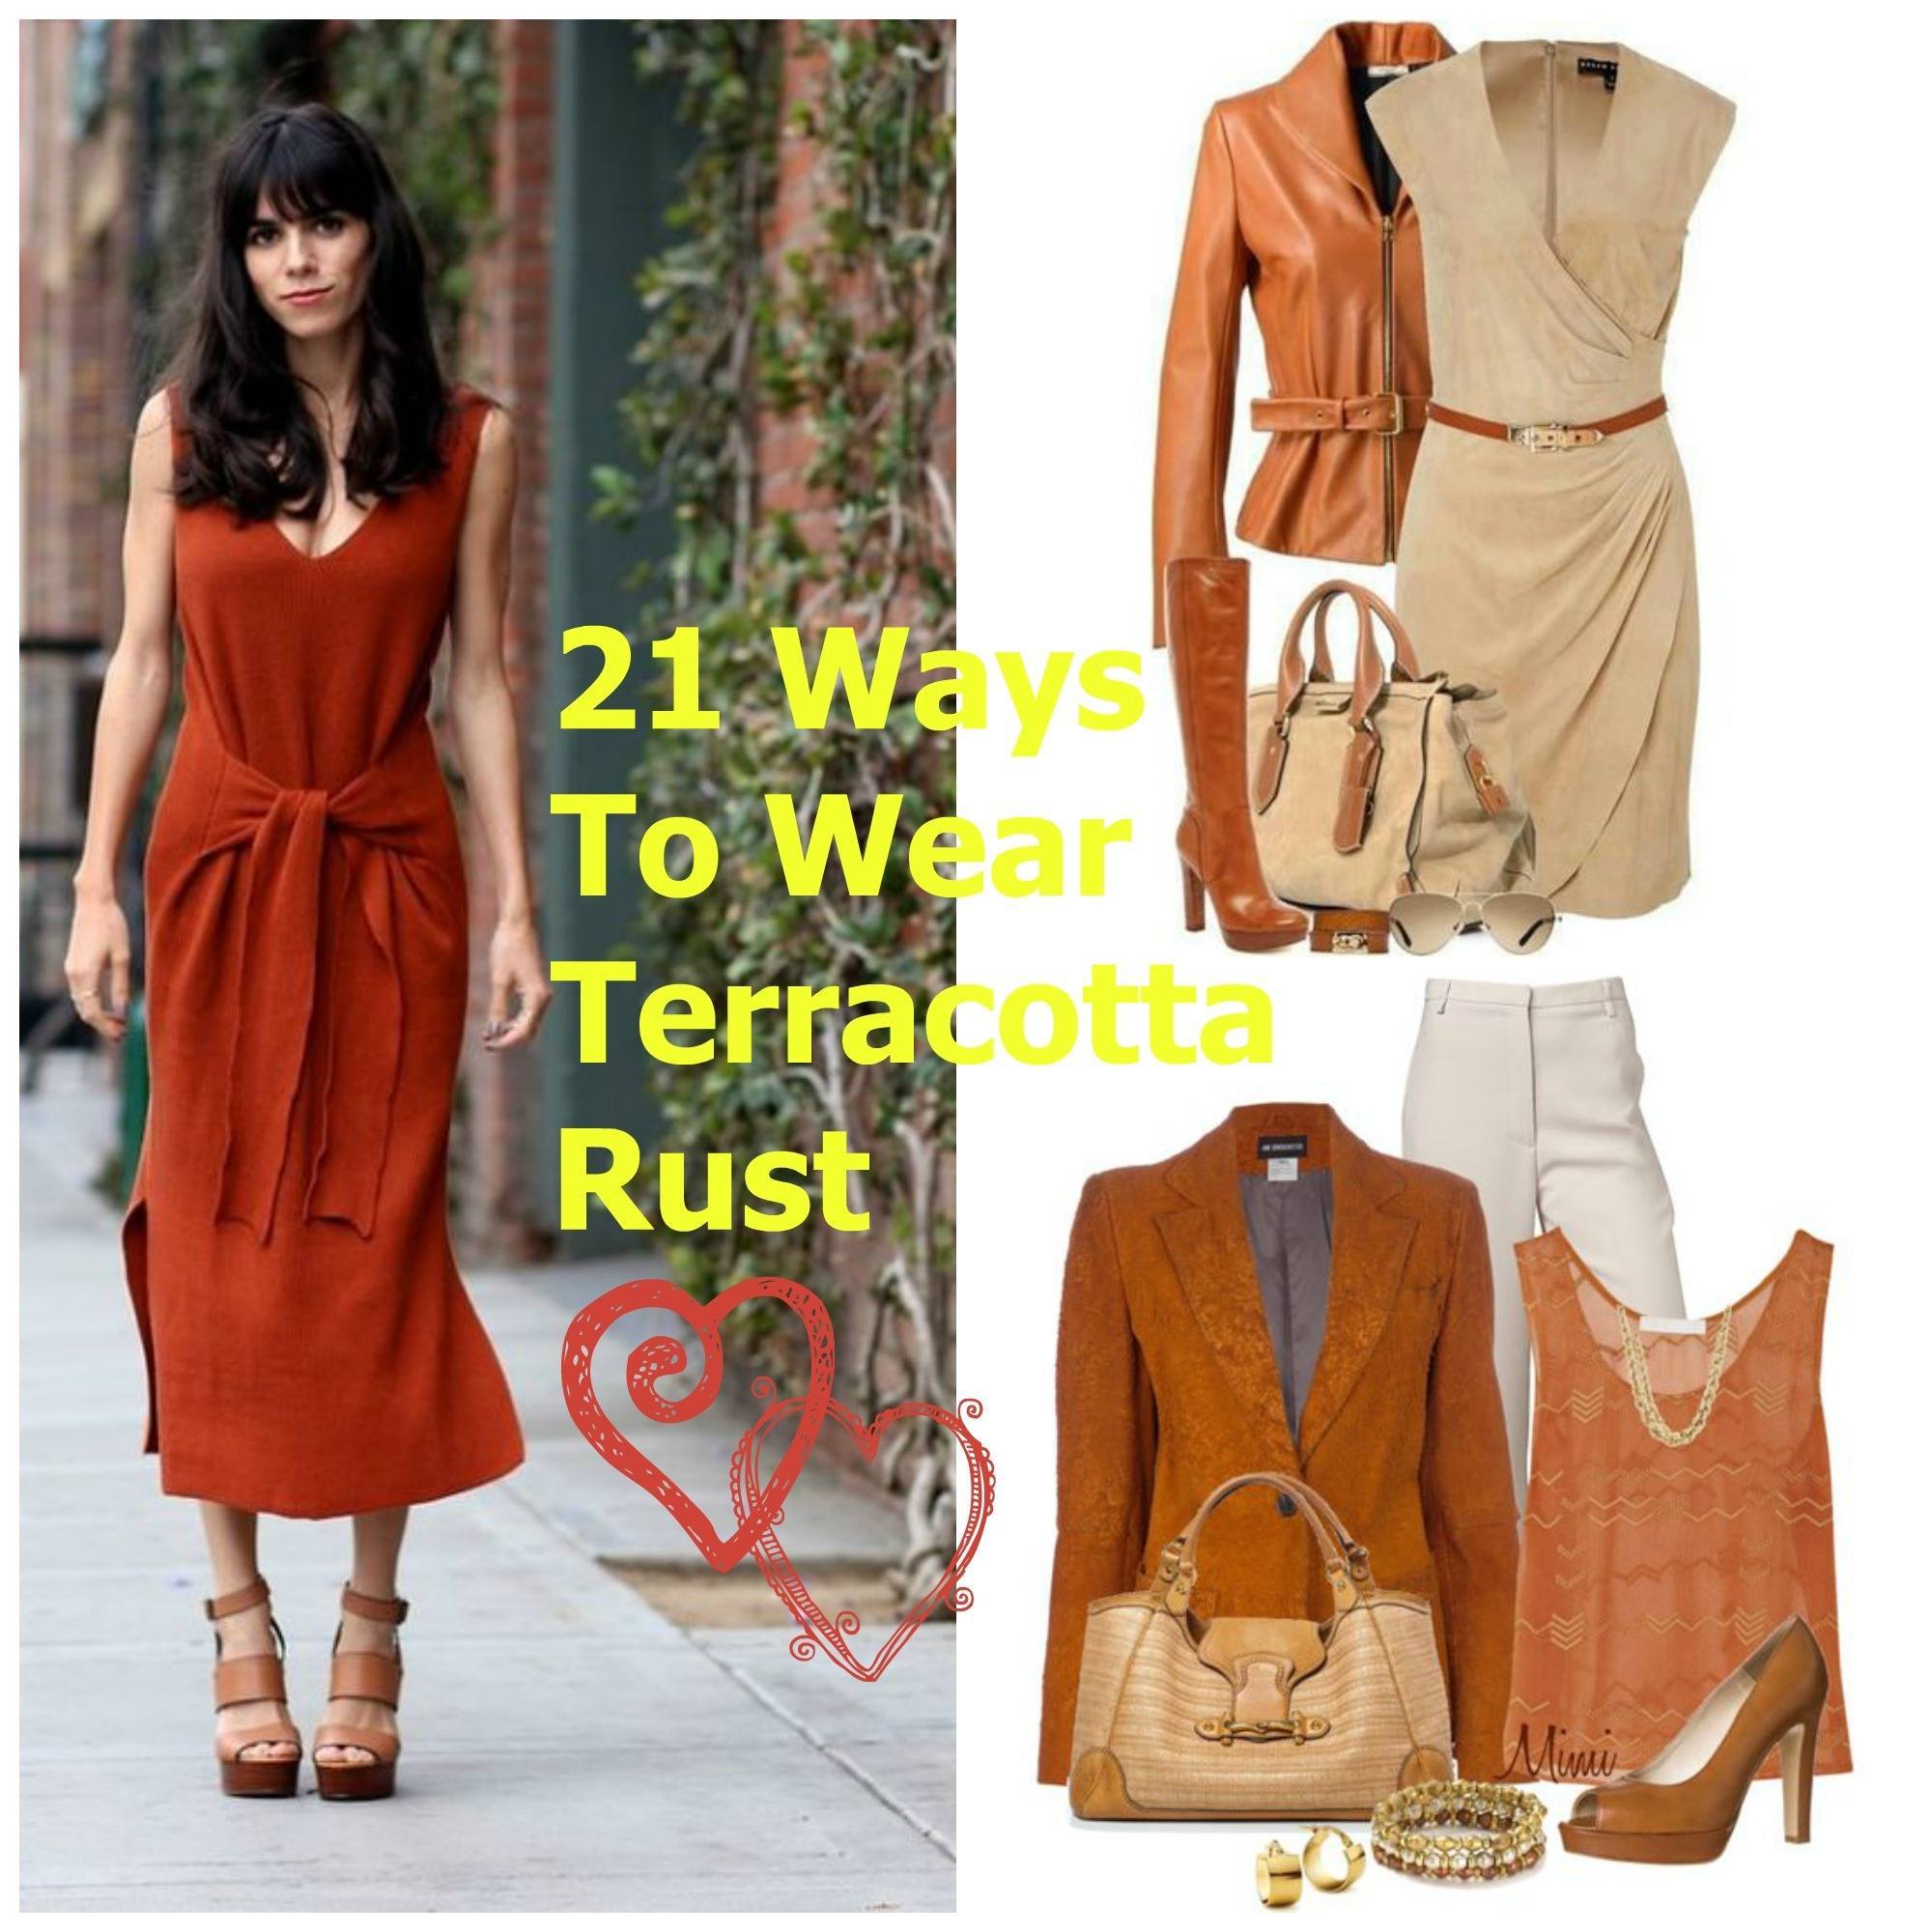 Terracotta Rust Outfits-21 Ways To Wear Terracotta Rust